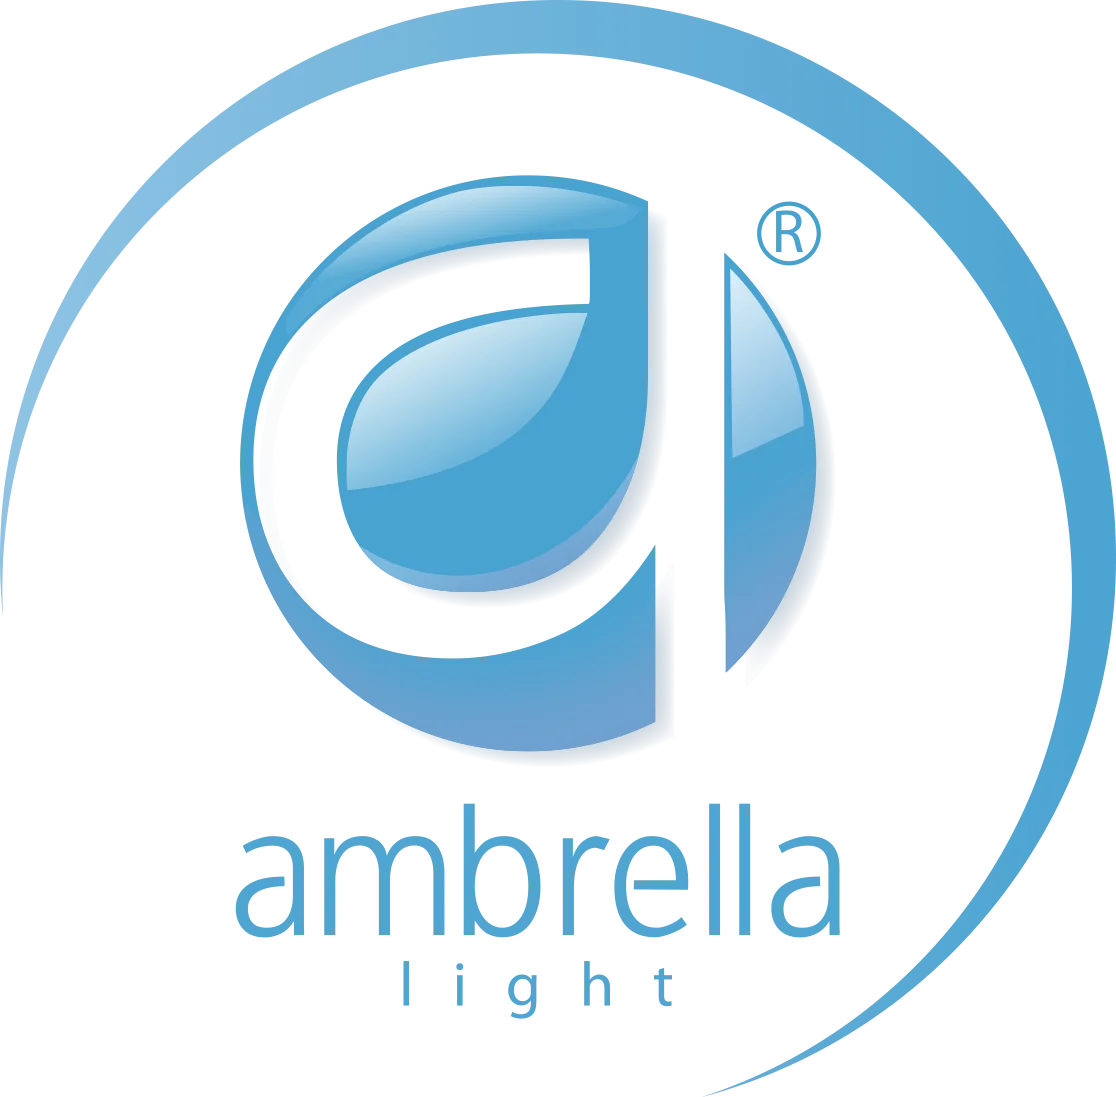 Ambrella Light